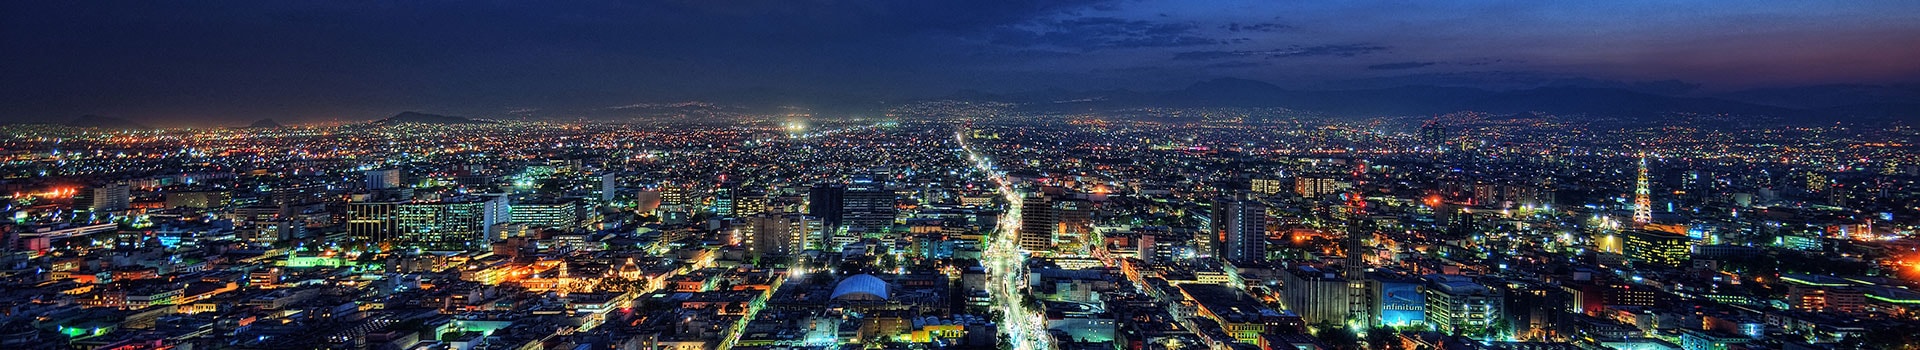 Guatemala city - aurora - Meksikon kaupunki